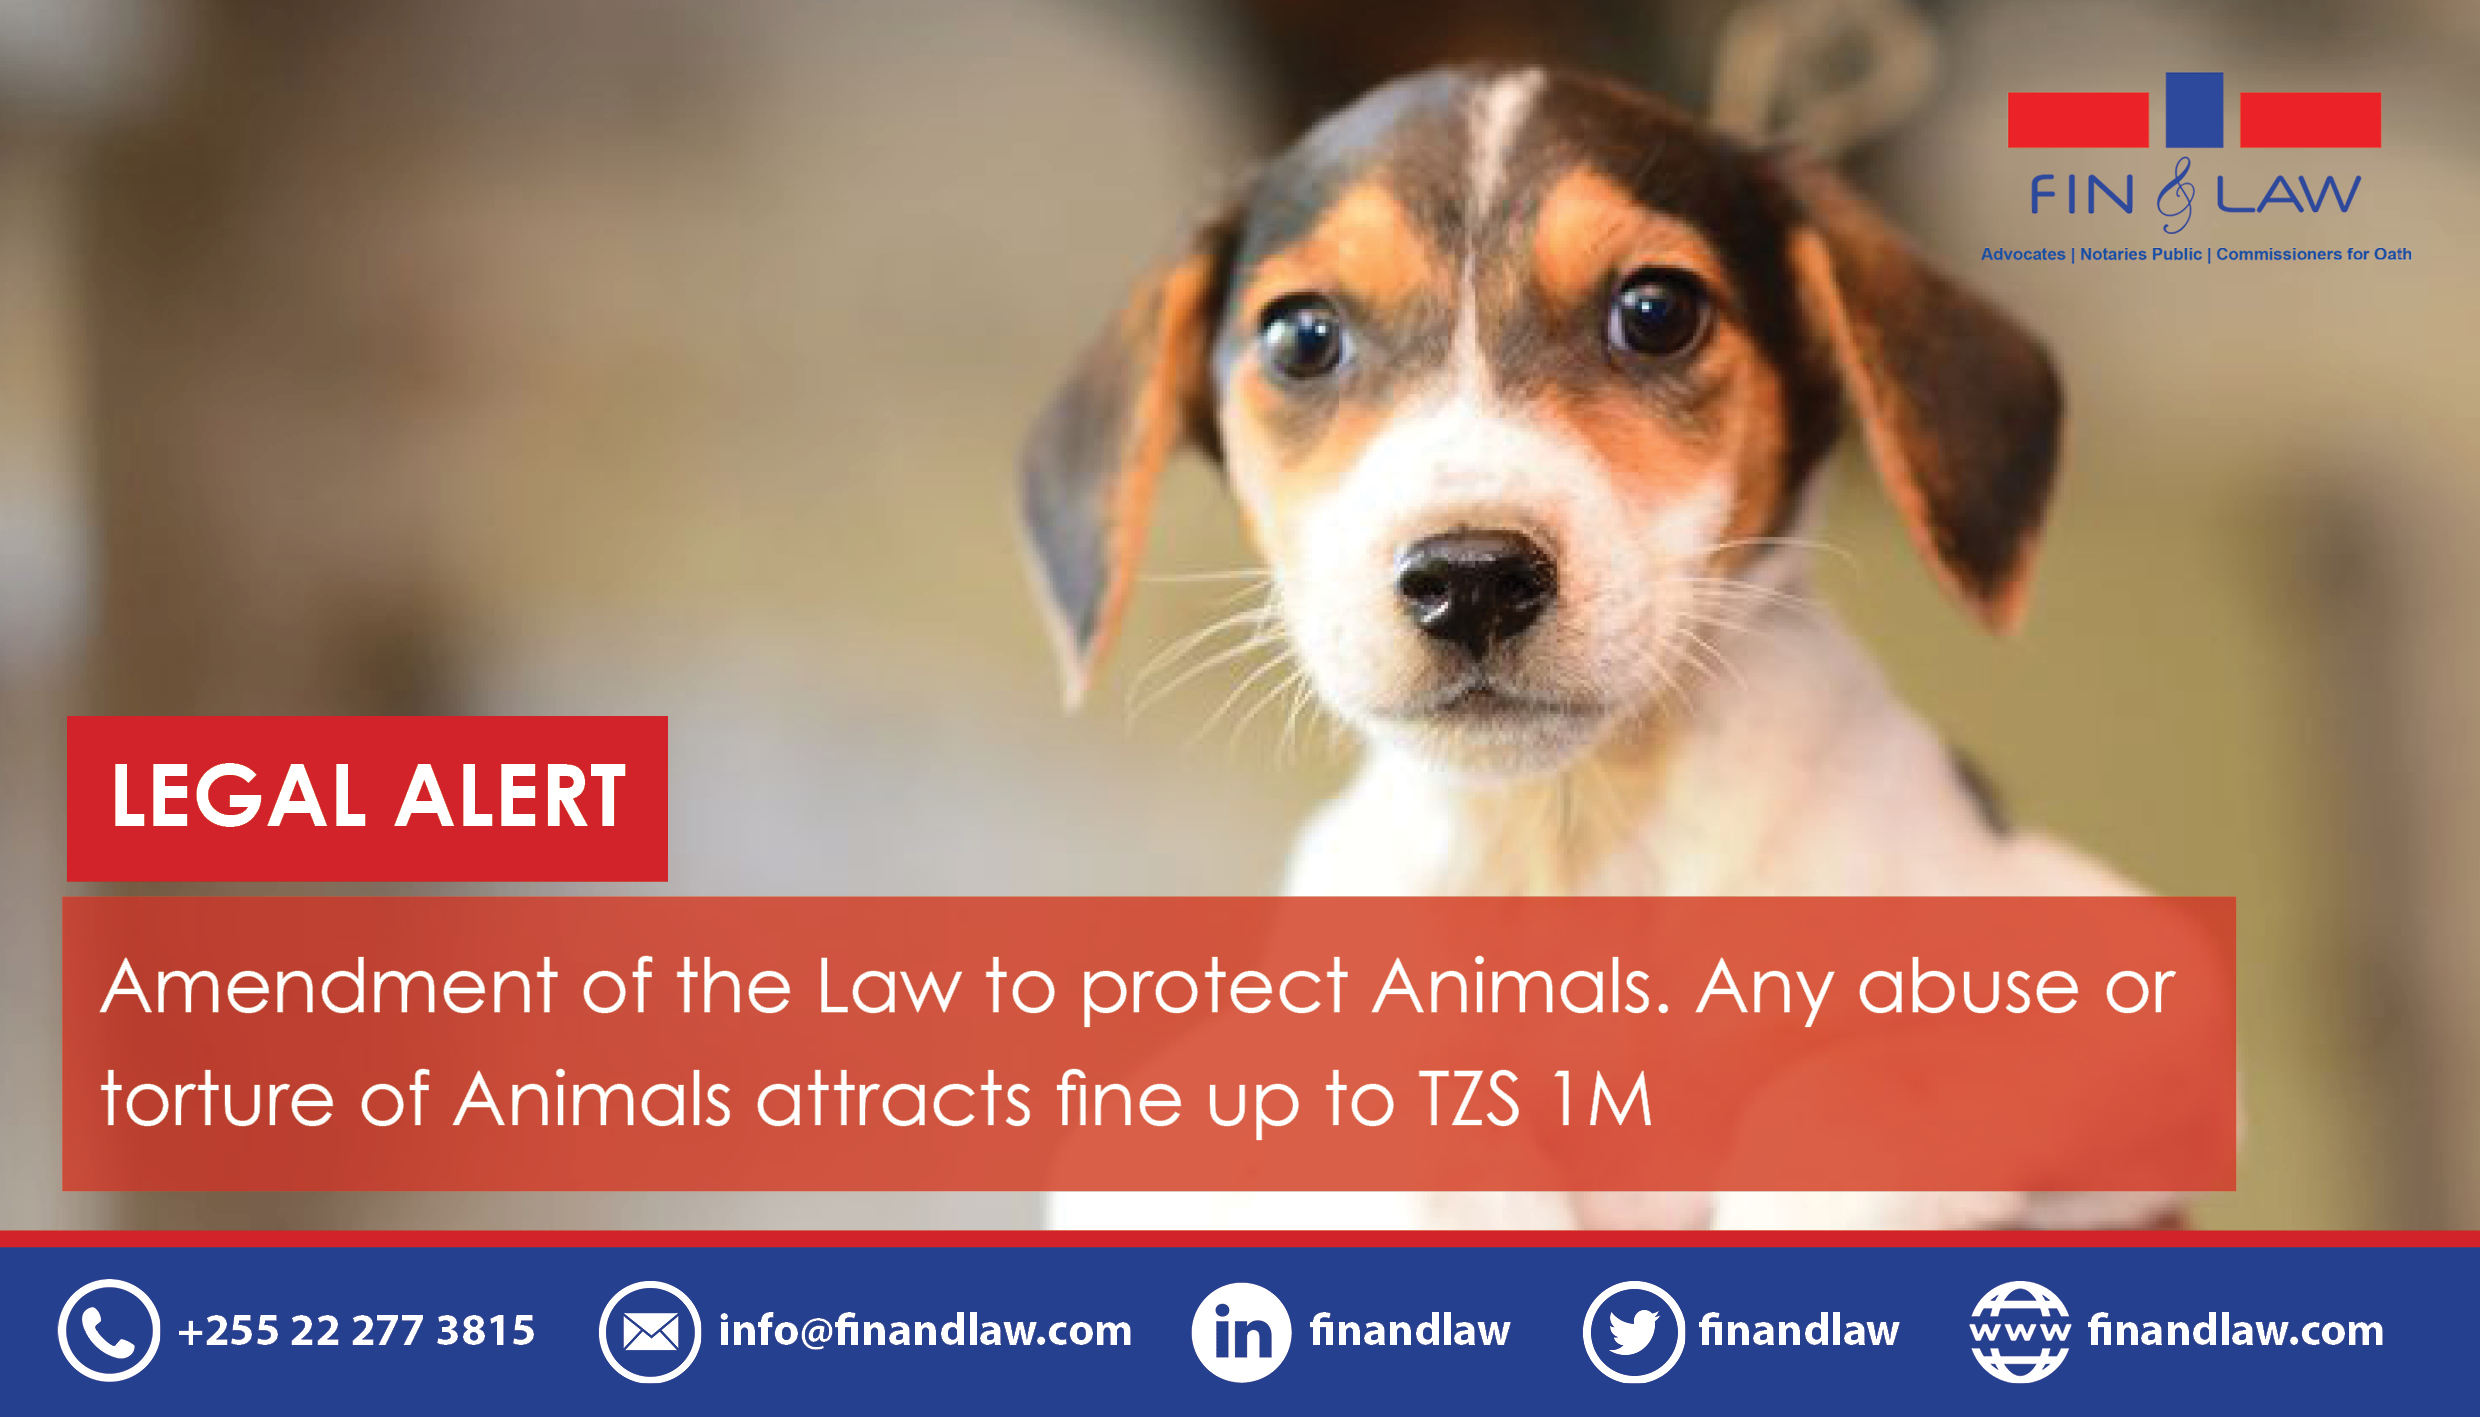 Amendment of the Law to Protect Animals in Tanzania – FIN & LAW